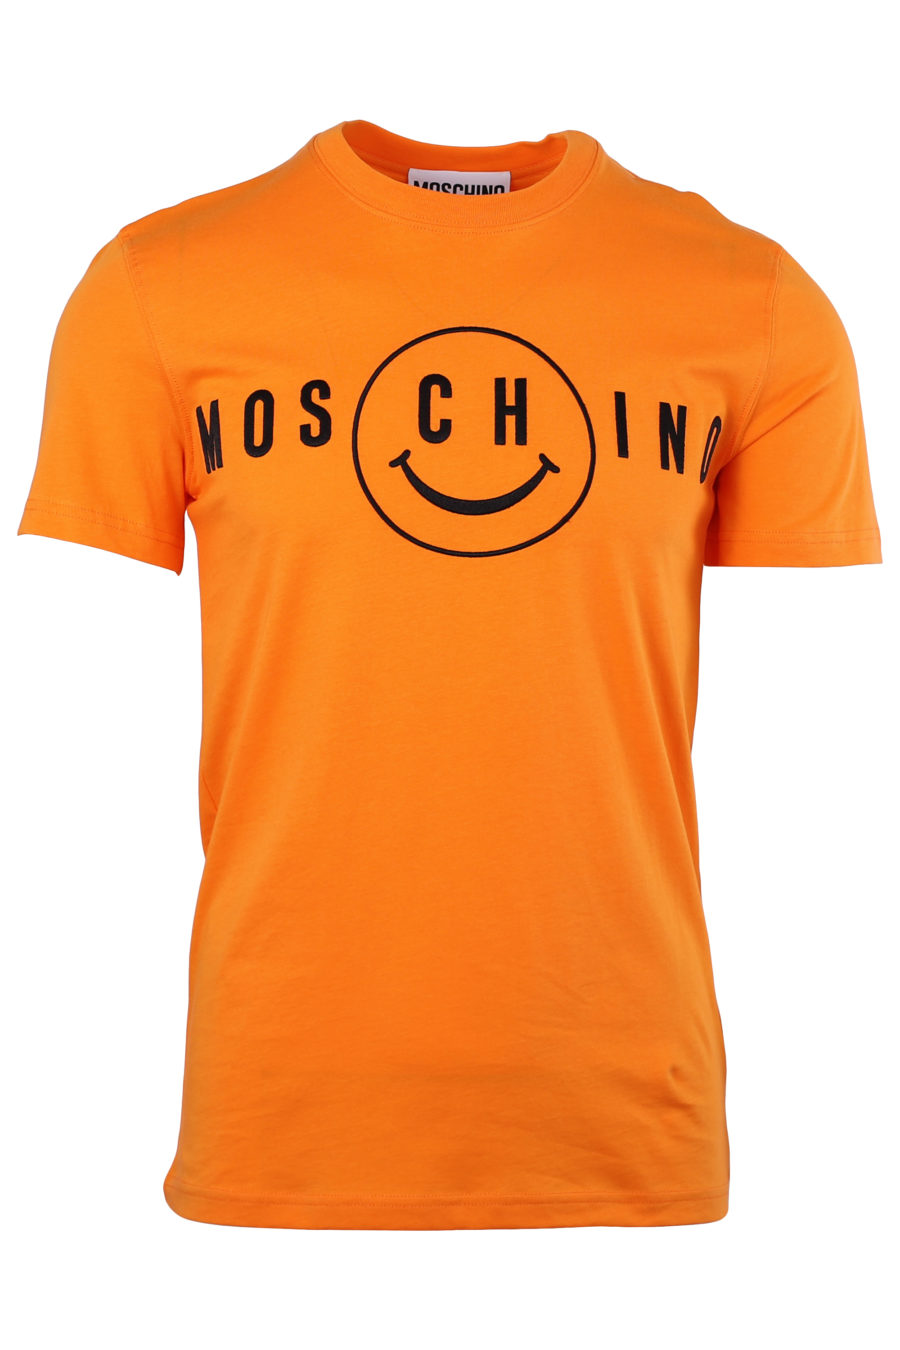 T-shirt orange "Smiley" avec logo brodé - IMG 9981